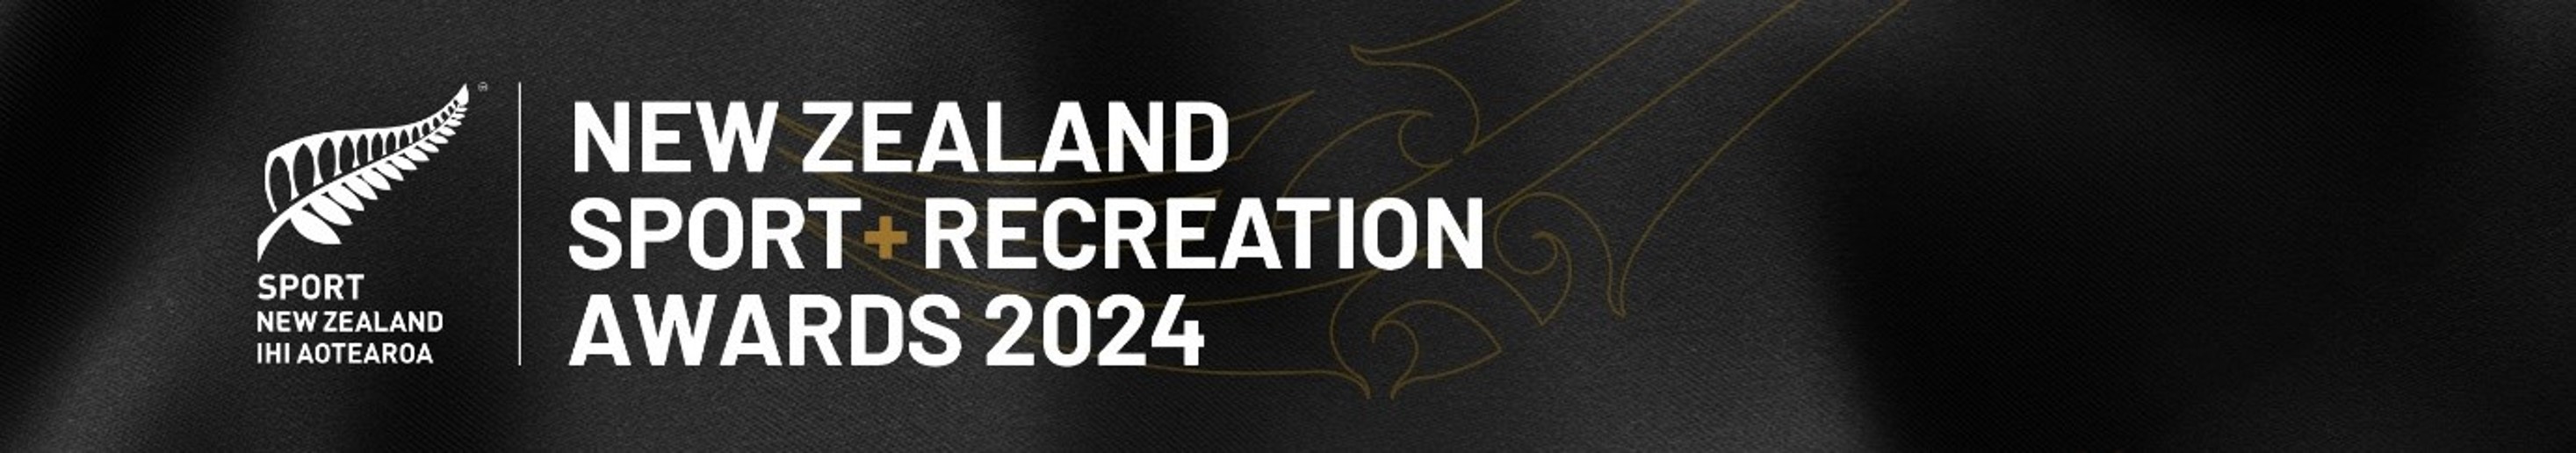 NZ Sport and Recreation Awards